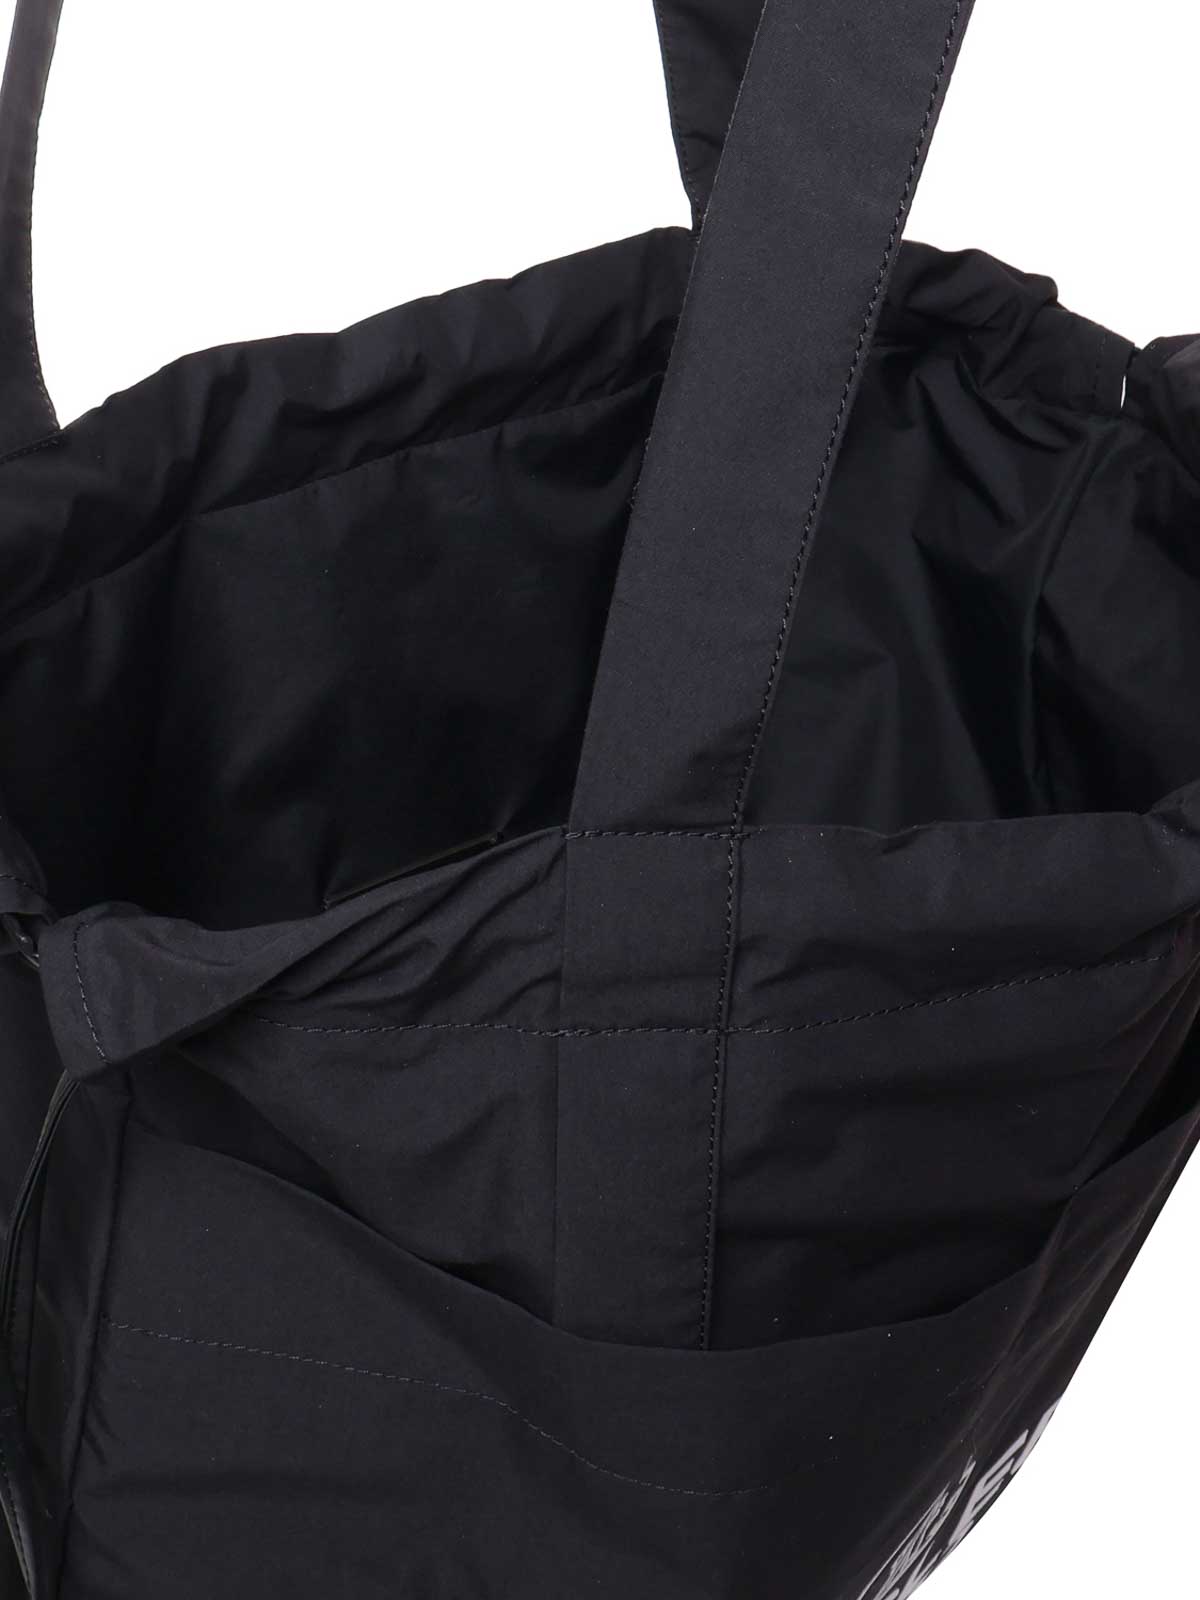 Shop Moncler Aq Drawstring Tote Bag In Black